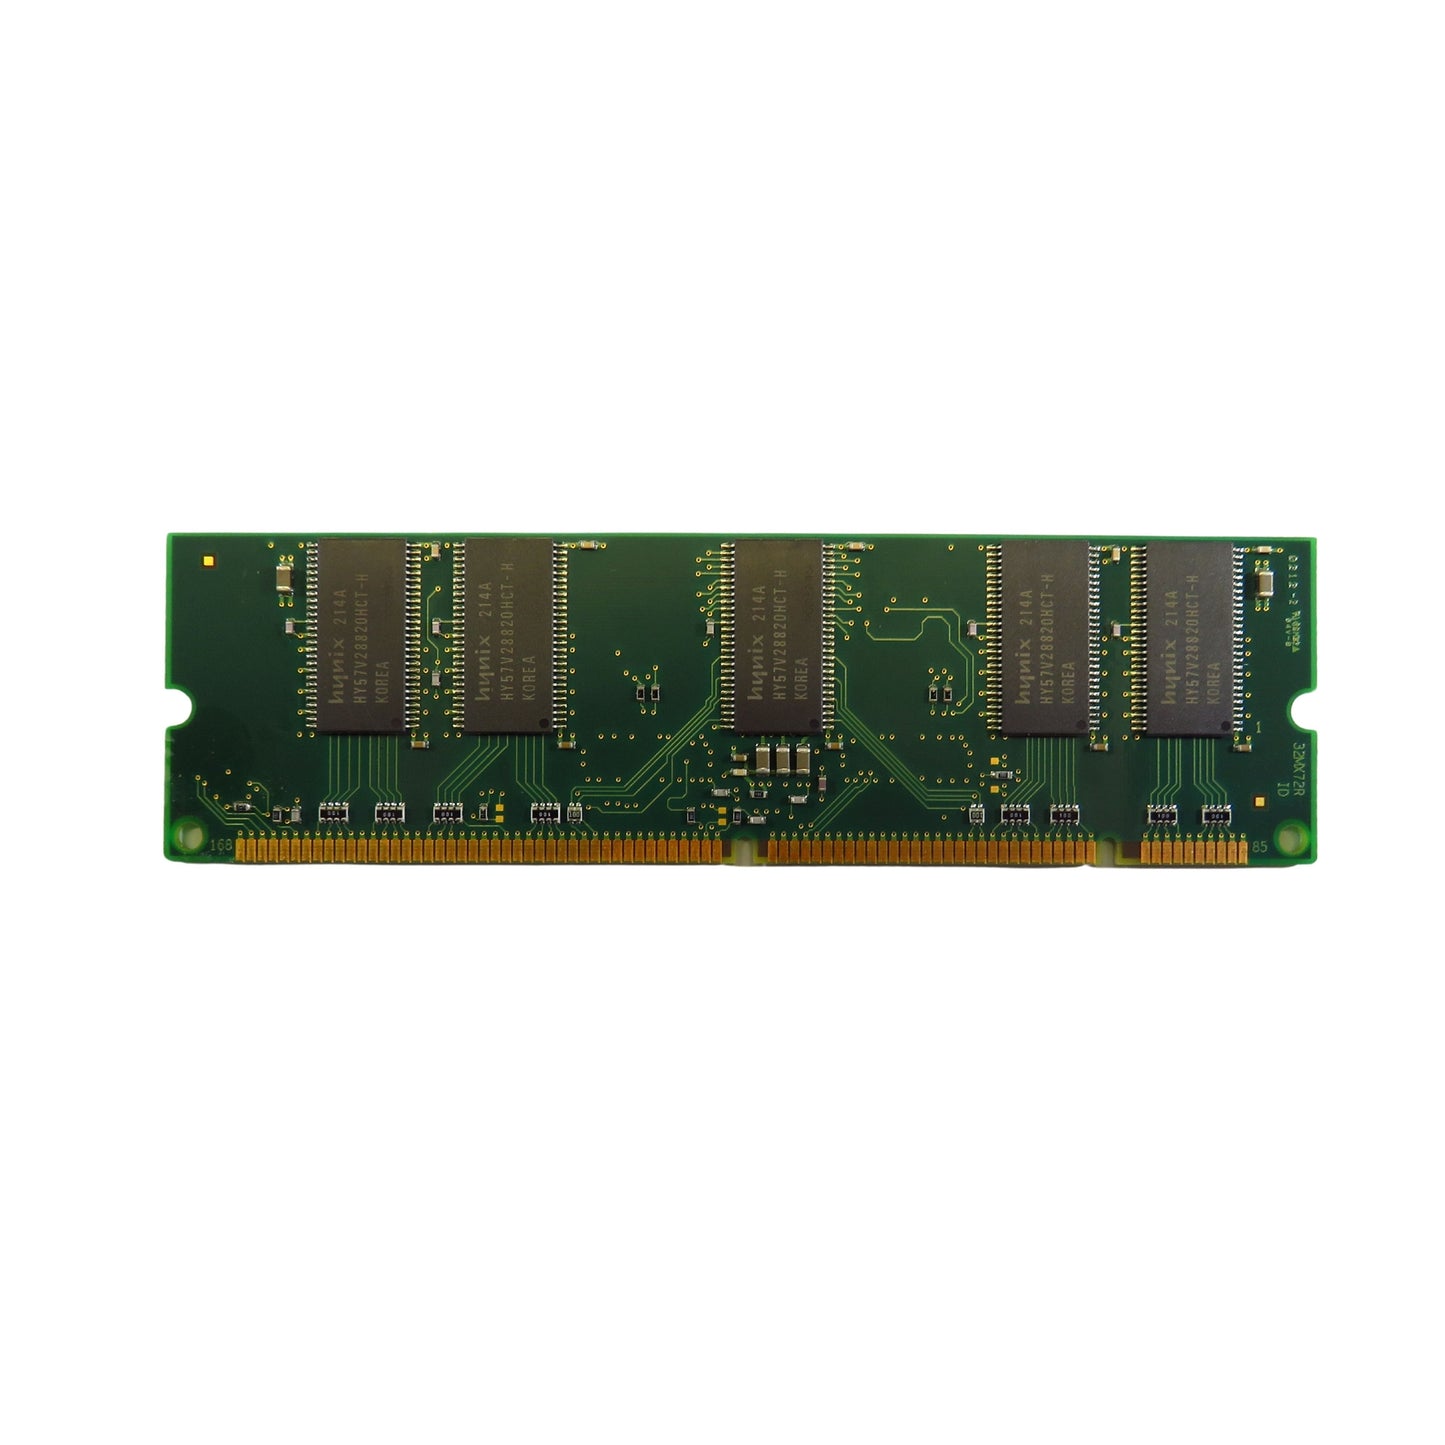 IBM 33L3321 128MB 133MHz DDR CL3 ECC RDIMM Server Memory (Refurbished)